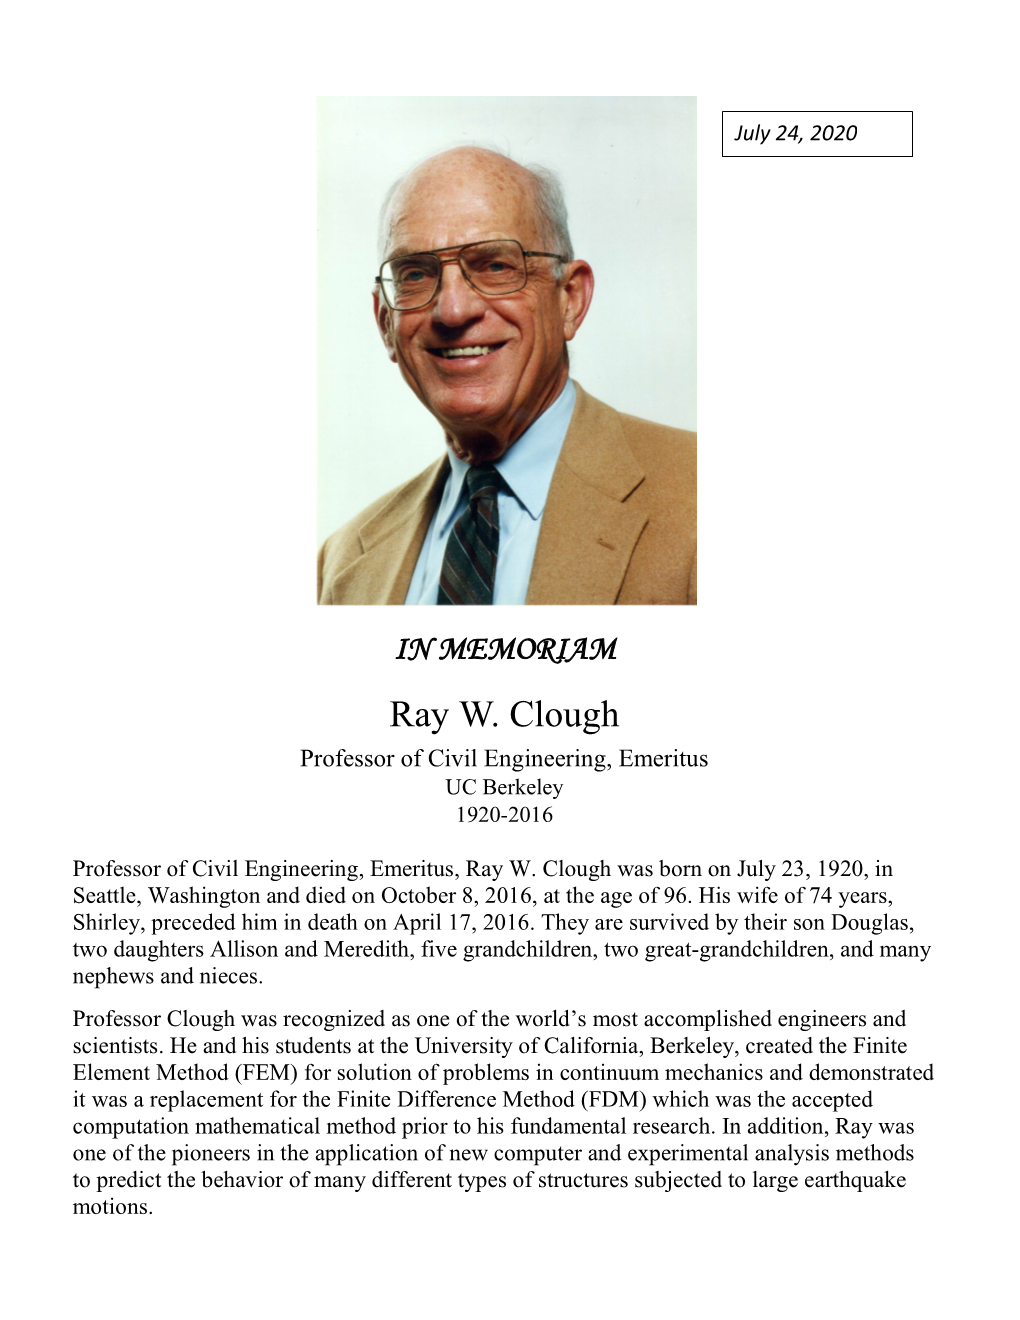 Ray W. Clough Professor of Civil Engineering, Emeritus UC Berkeley 1920-2016